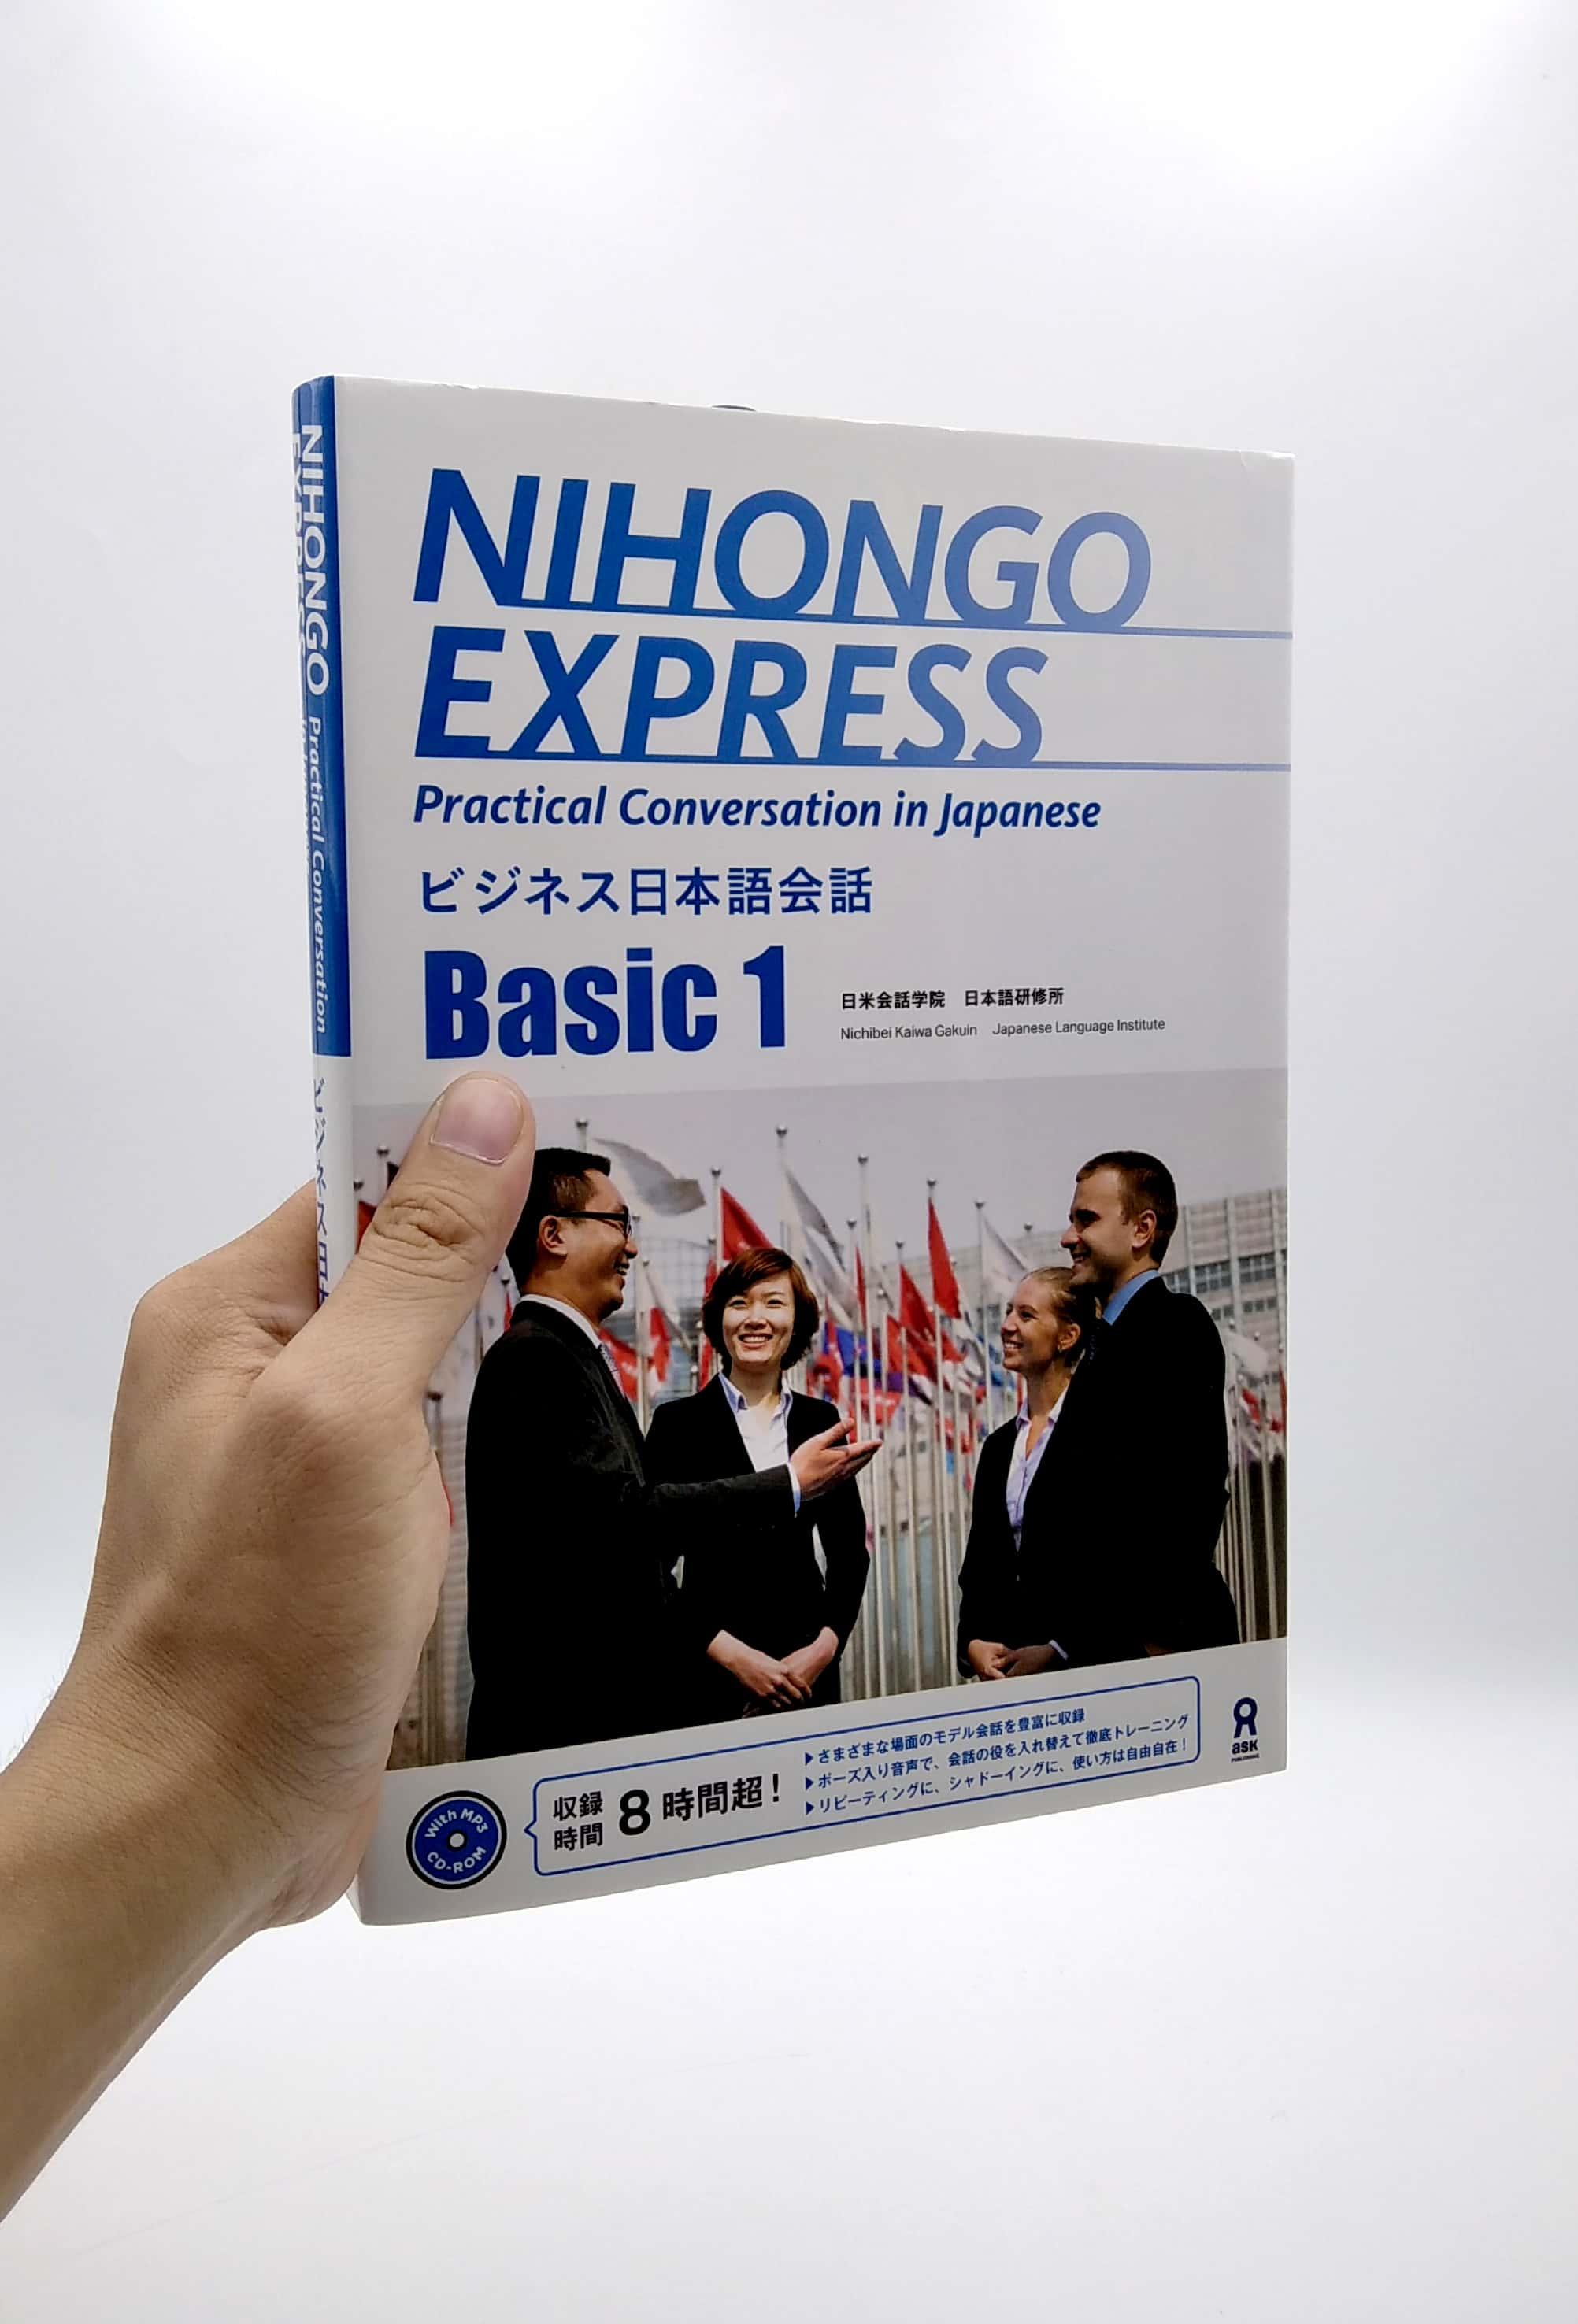 Nihongo Express Practical Conversation In Japanese Basic 1 (Japanese Edition)